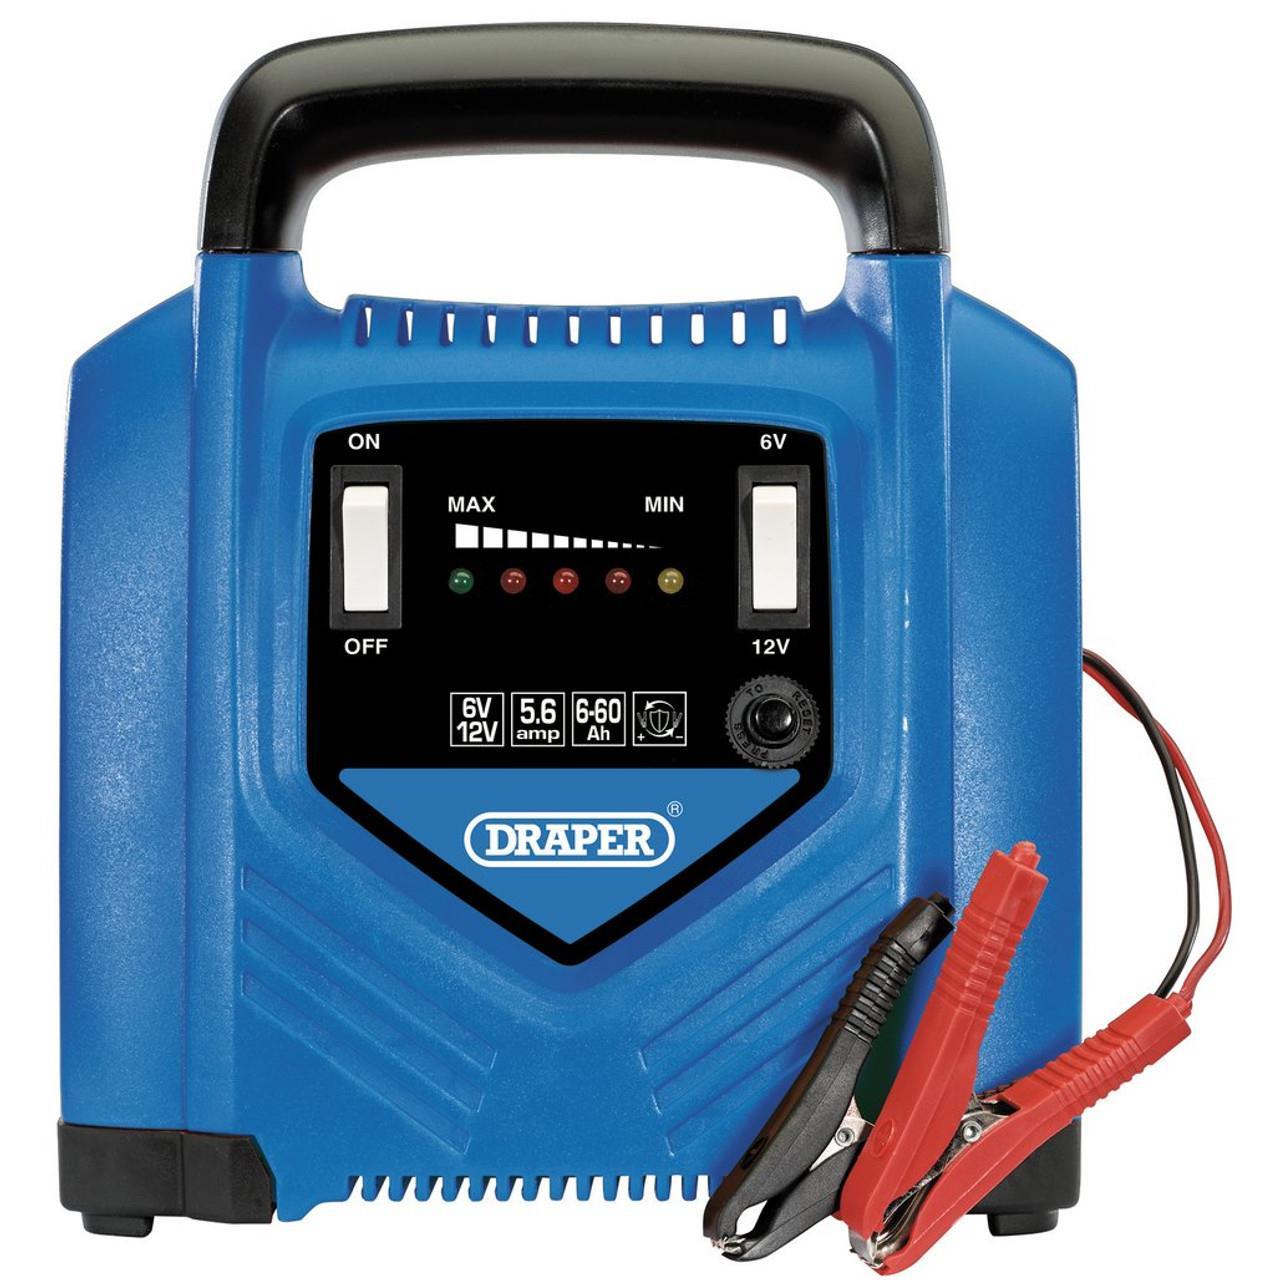 Draper 6V/12V Battery Charger, 5.6A, Blue and Black 53071 - Tools 2U Direct SW